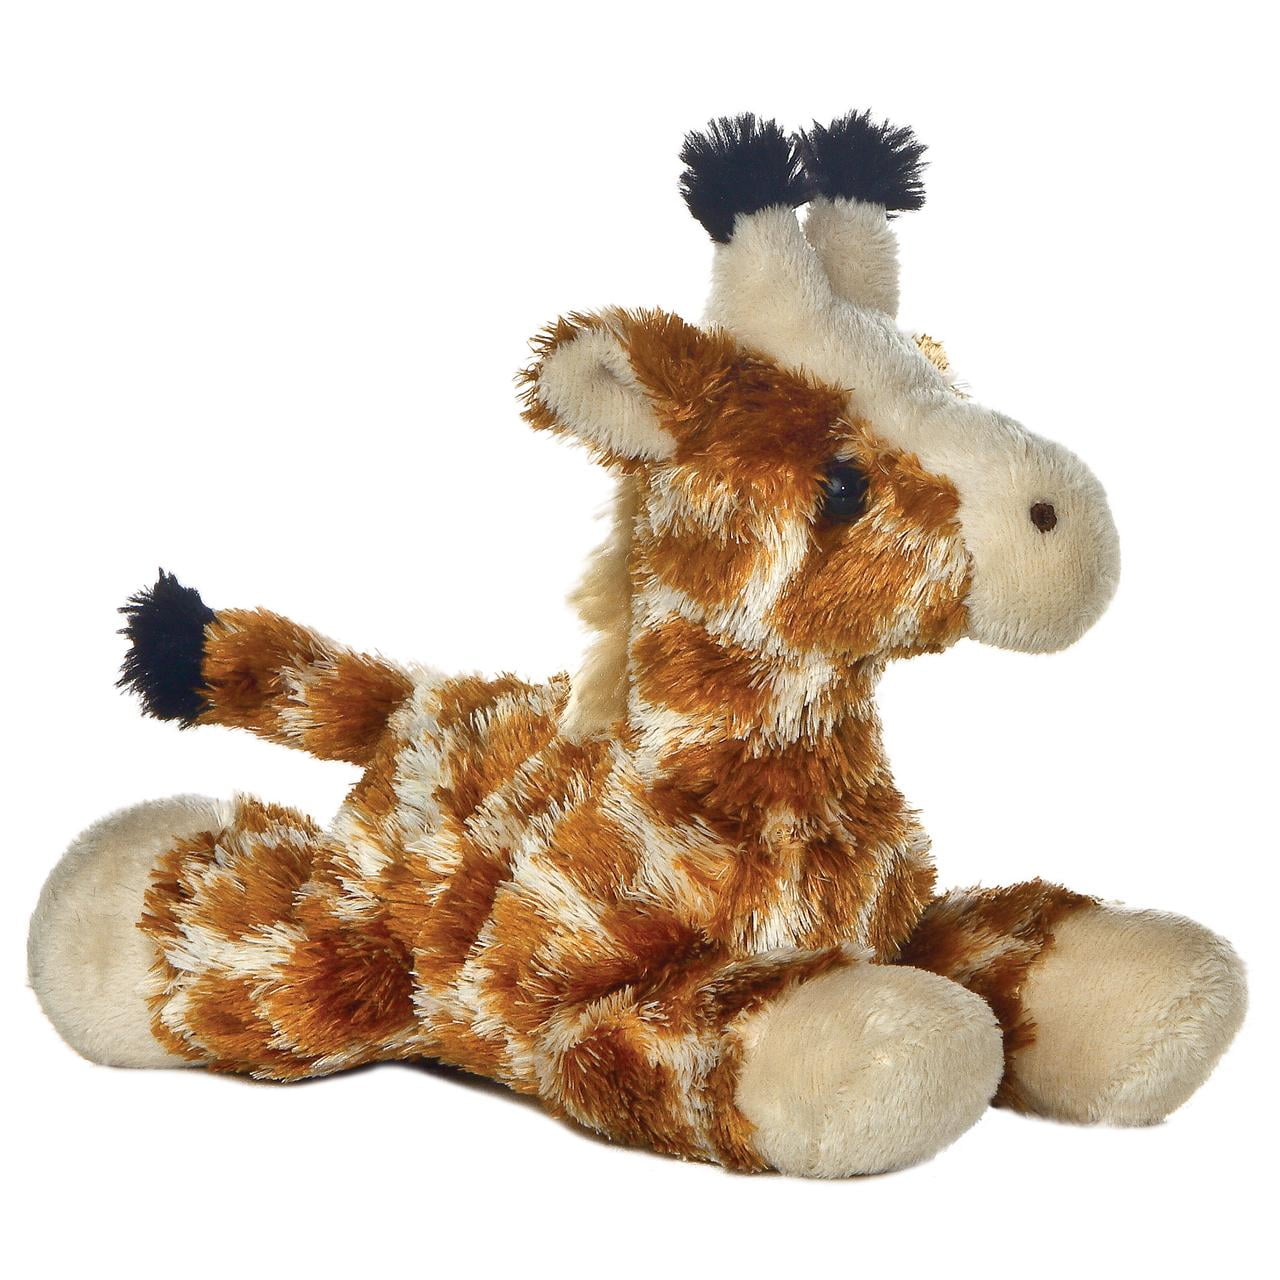 GINGER giraffe Douglas 8" tall zoo stuffed plush animal toy brown white 